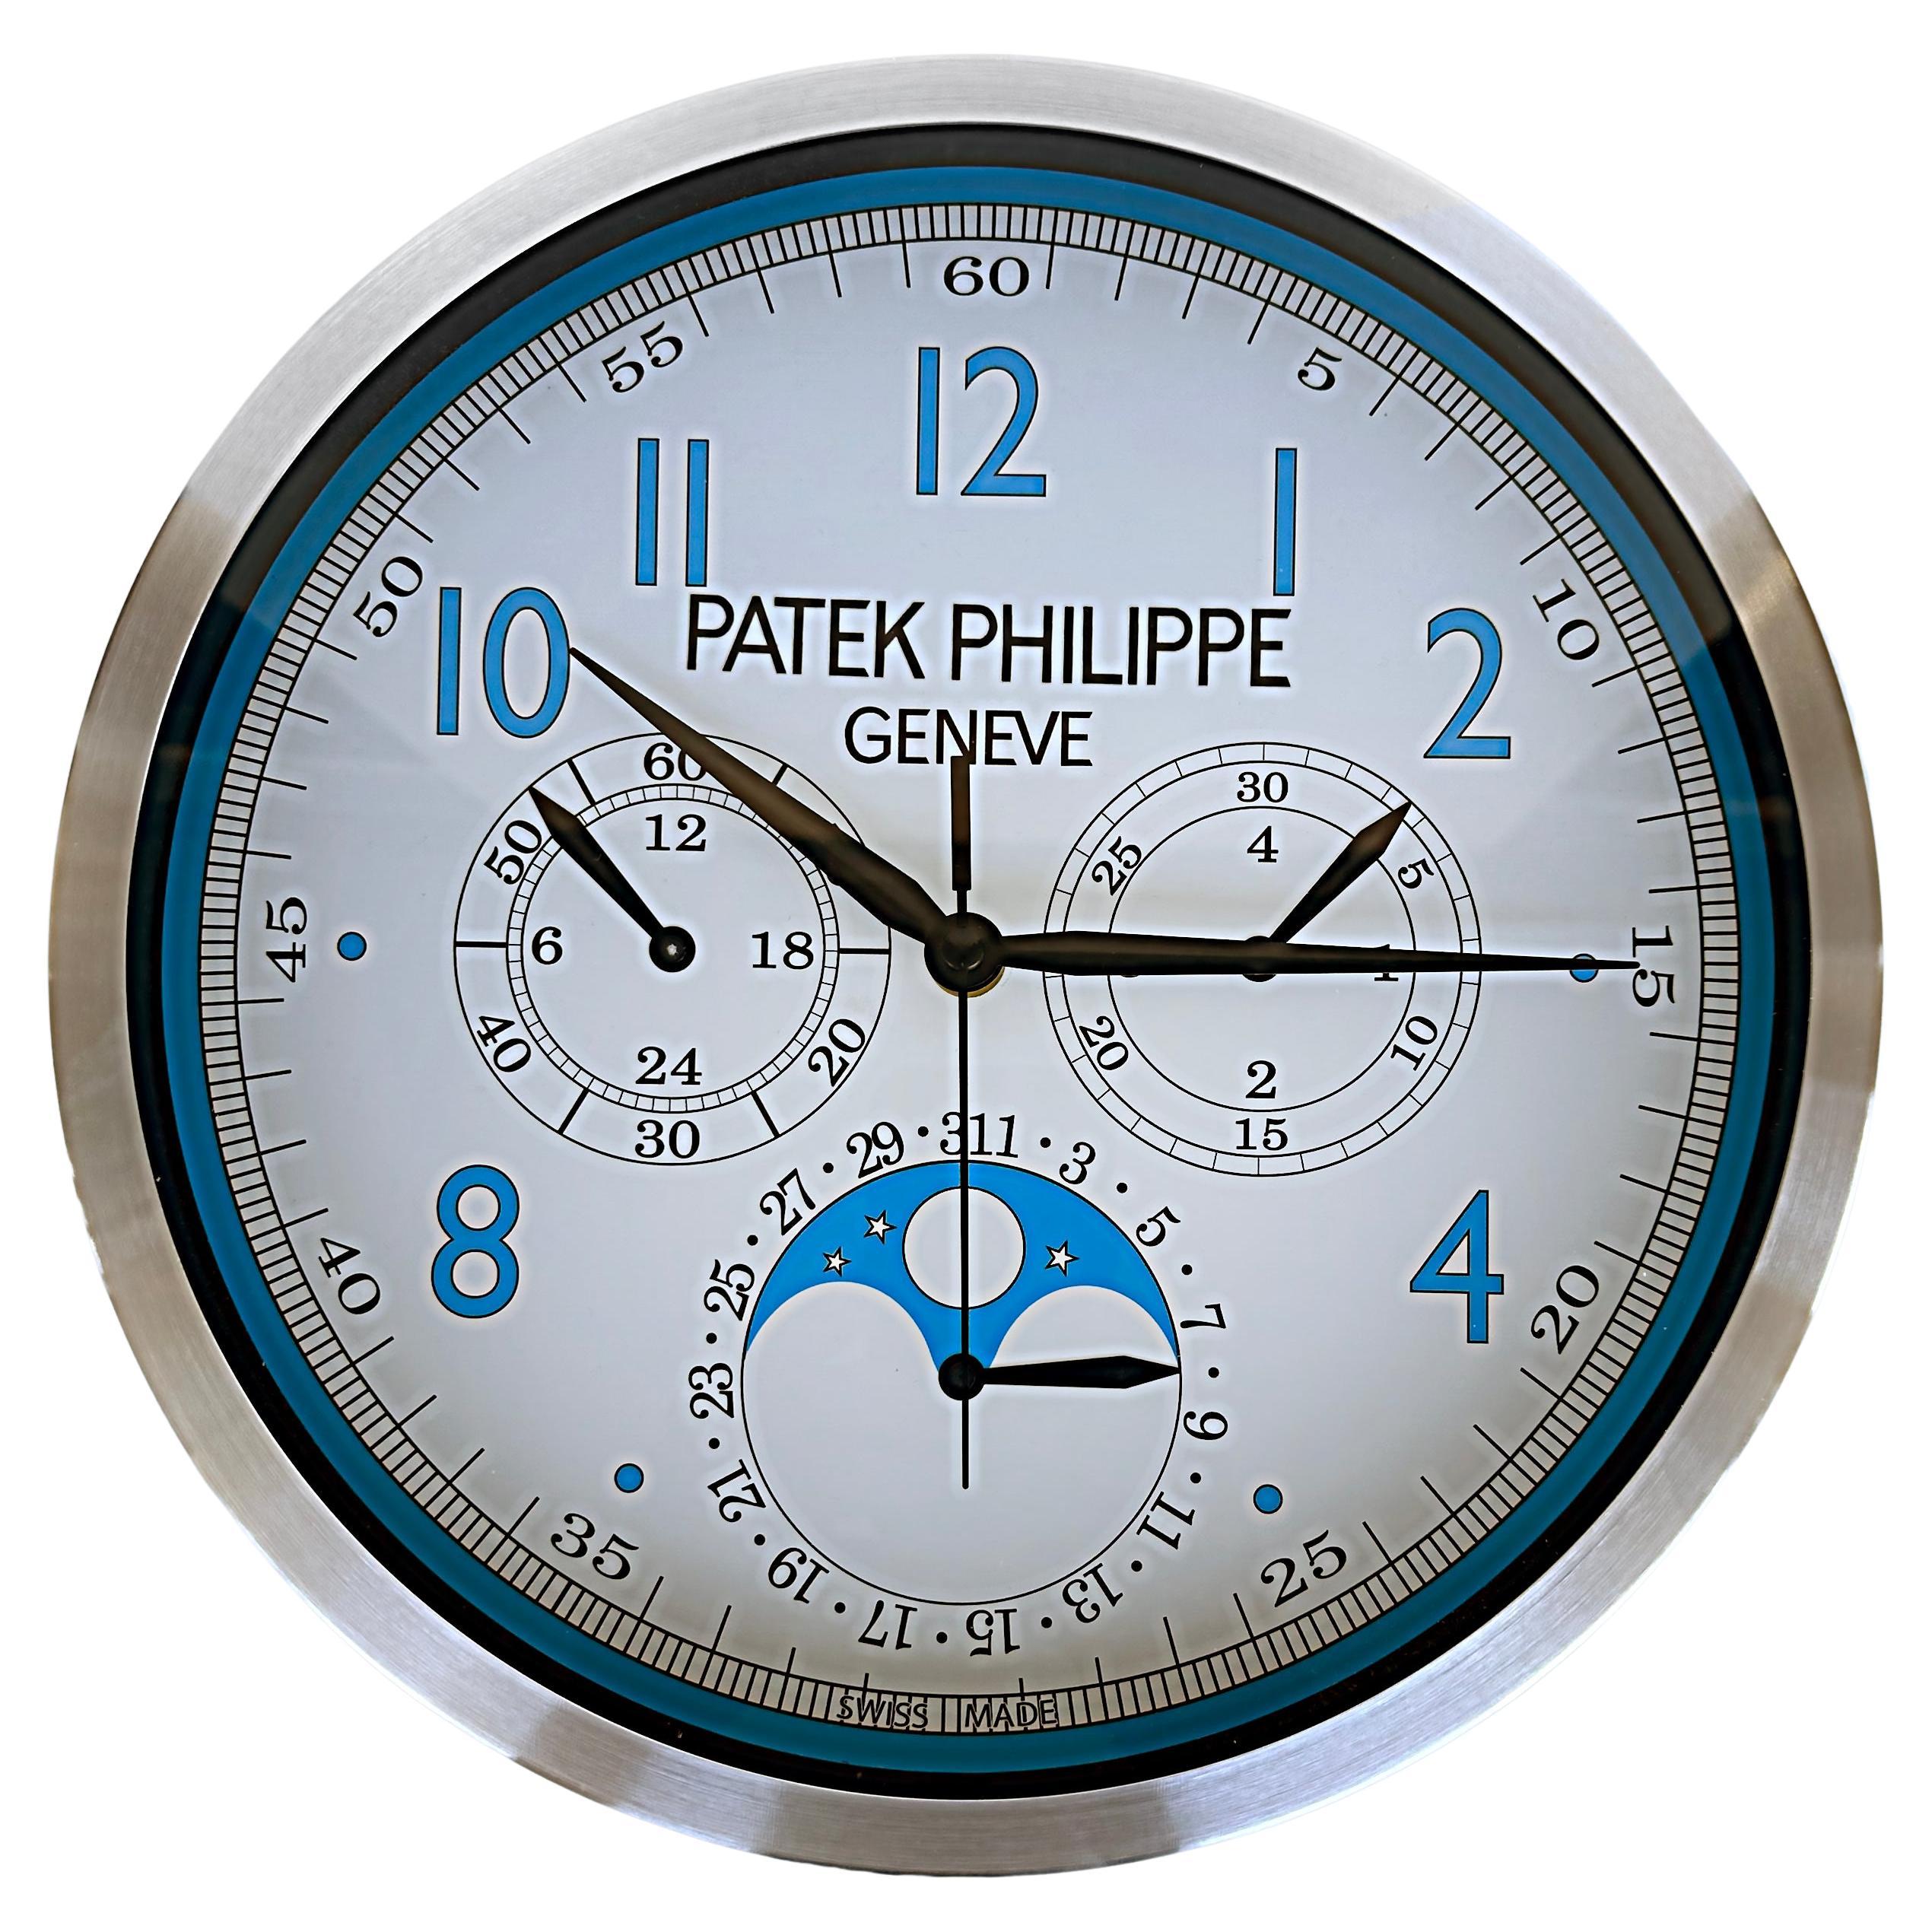 Patek Philippe Geneve, Switzerland Dealer's Advertising Chronograph Wall Clock